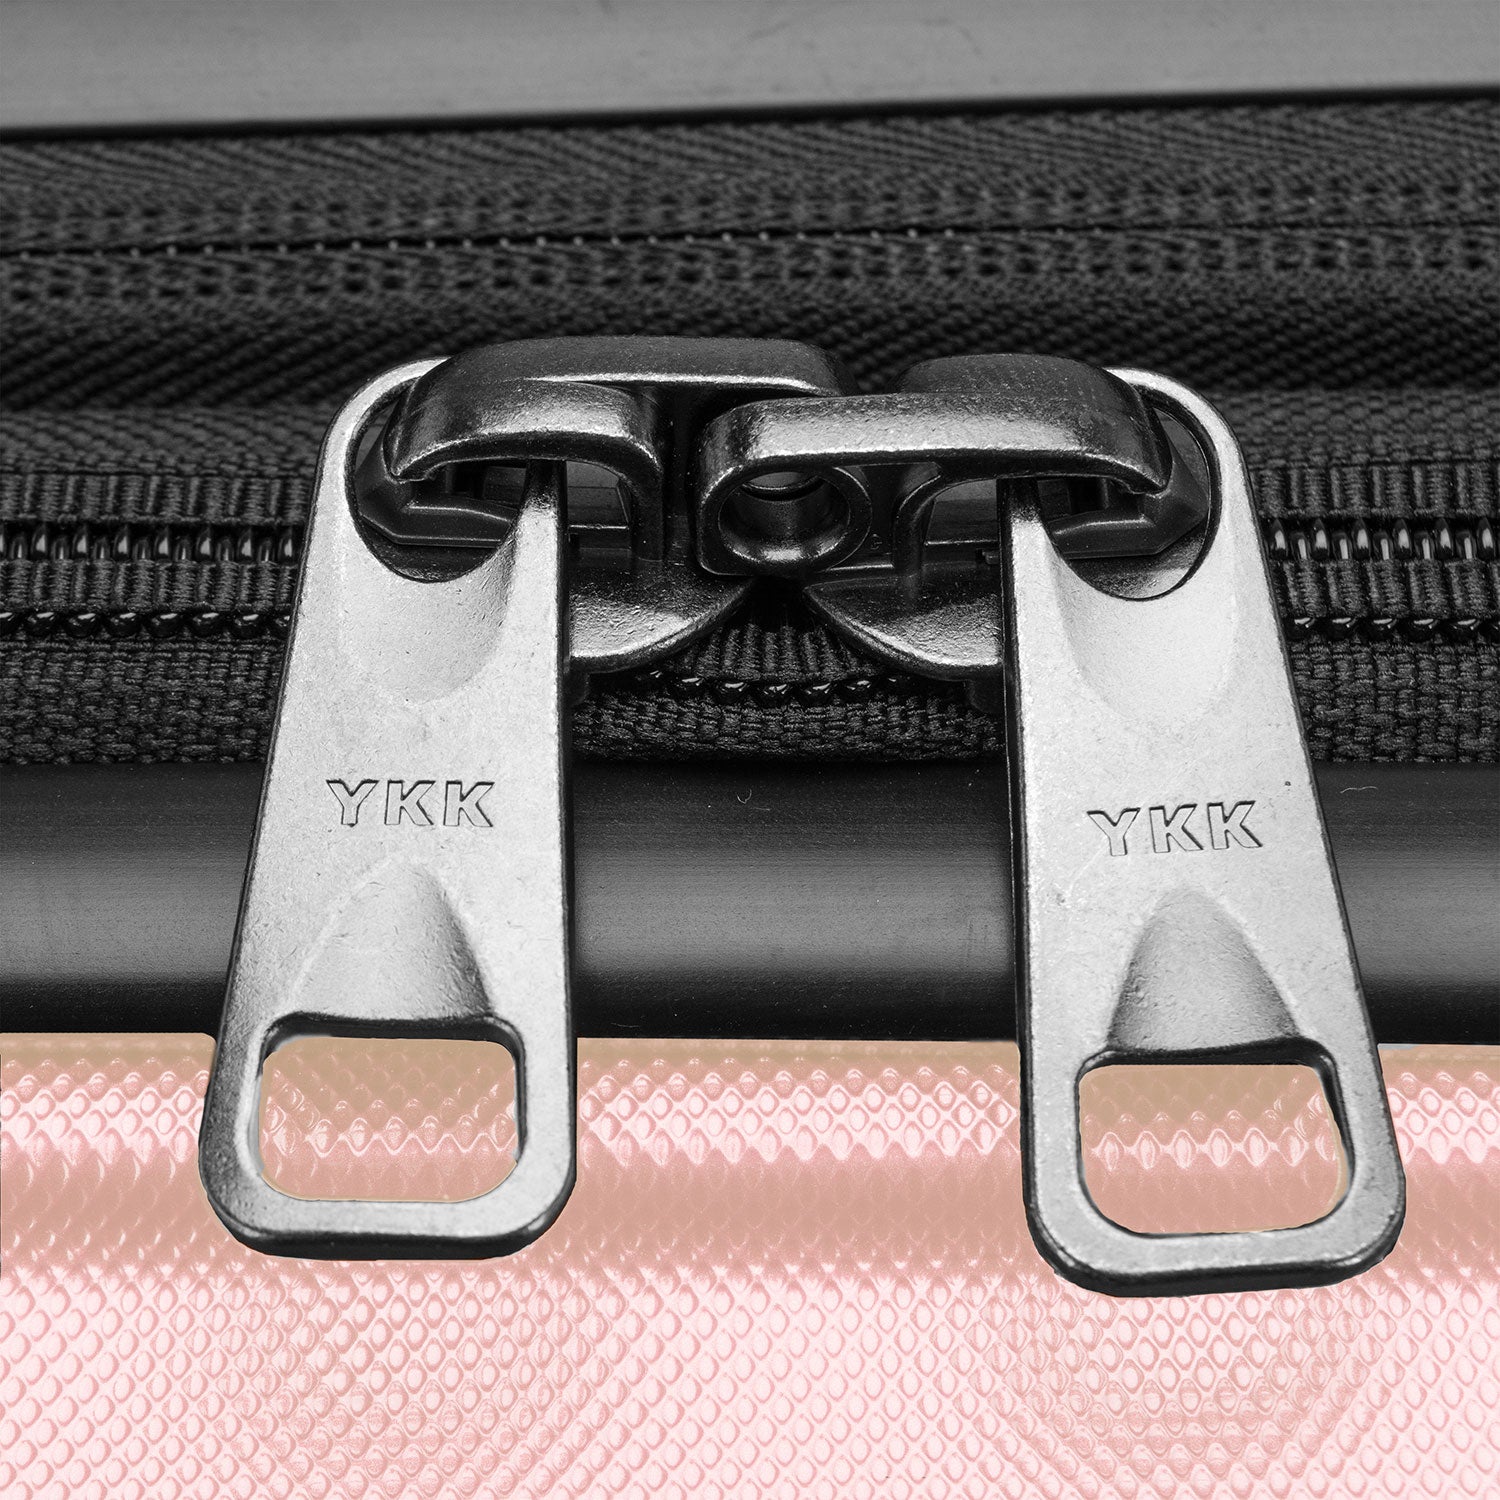 Archer 3 Piece 4 Wheel Spinner Luggage Suitcase Set w/ Built In USB Po –  Traveler's Choice